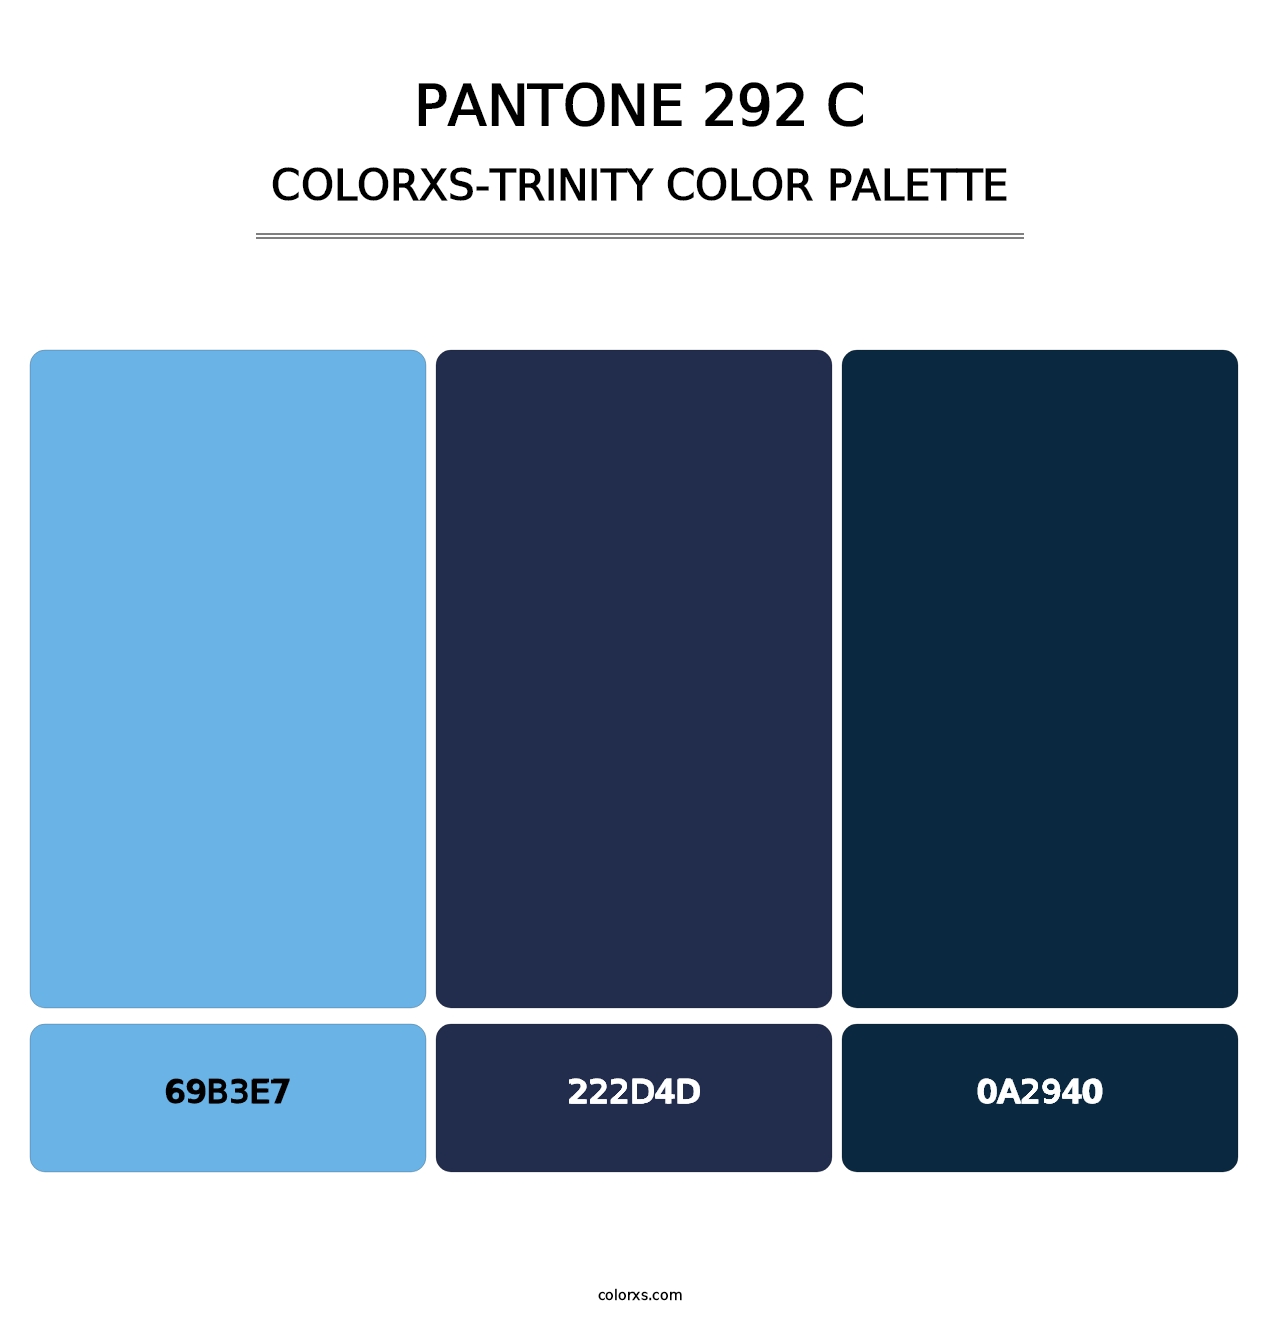 PANTONE 292 C - Colorxs Trinity Palette